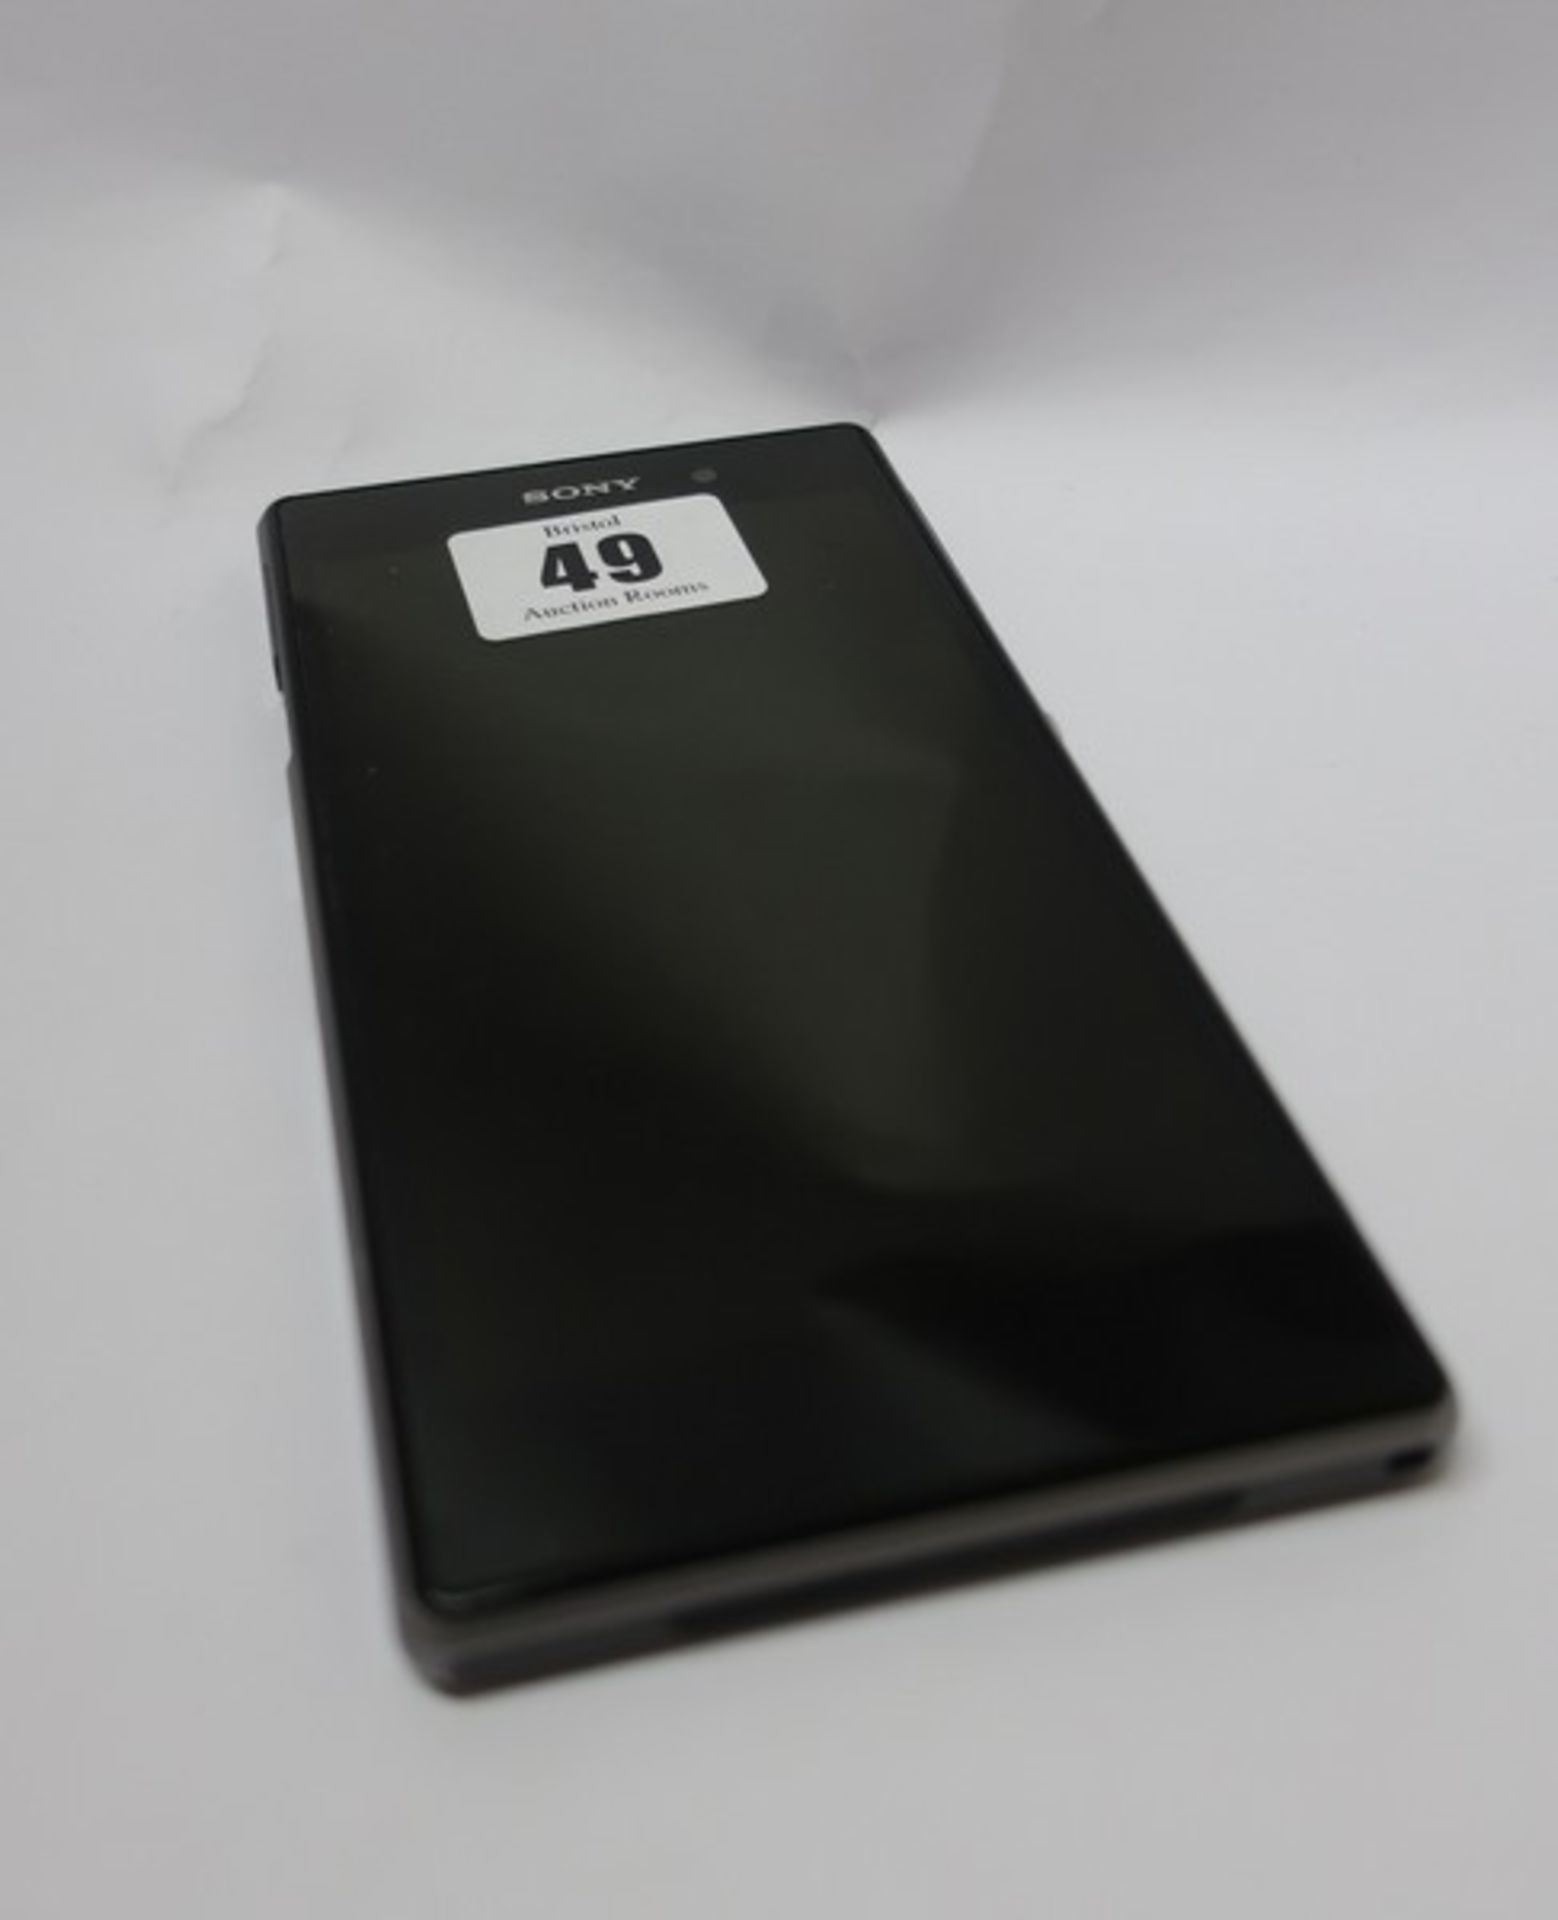 A Sony Xperia Z1 C6903 16GB in Black (IMEI: 358091055631474) (FRP clear).